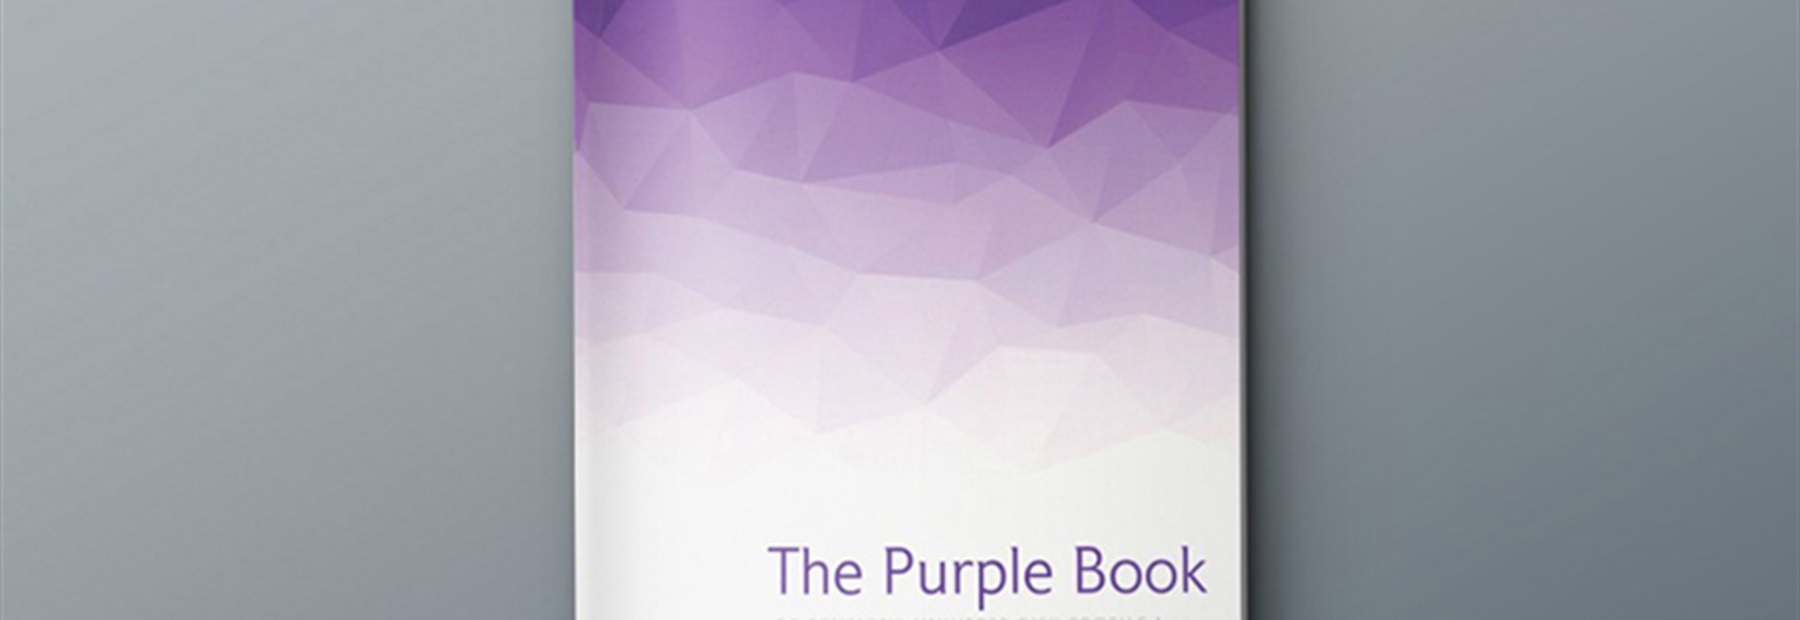 purple book default image final two